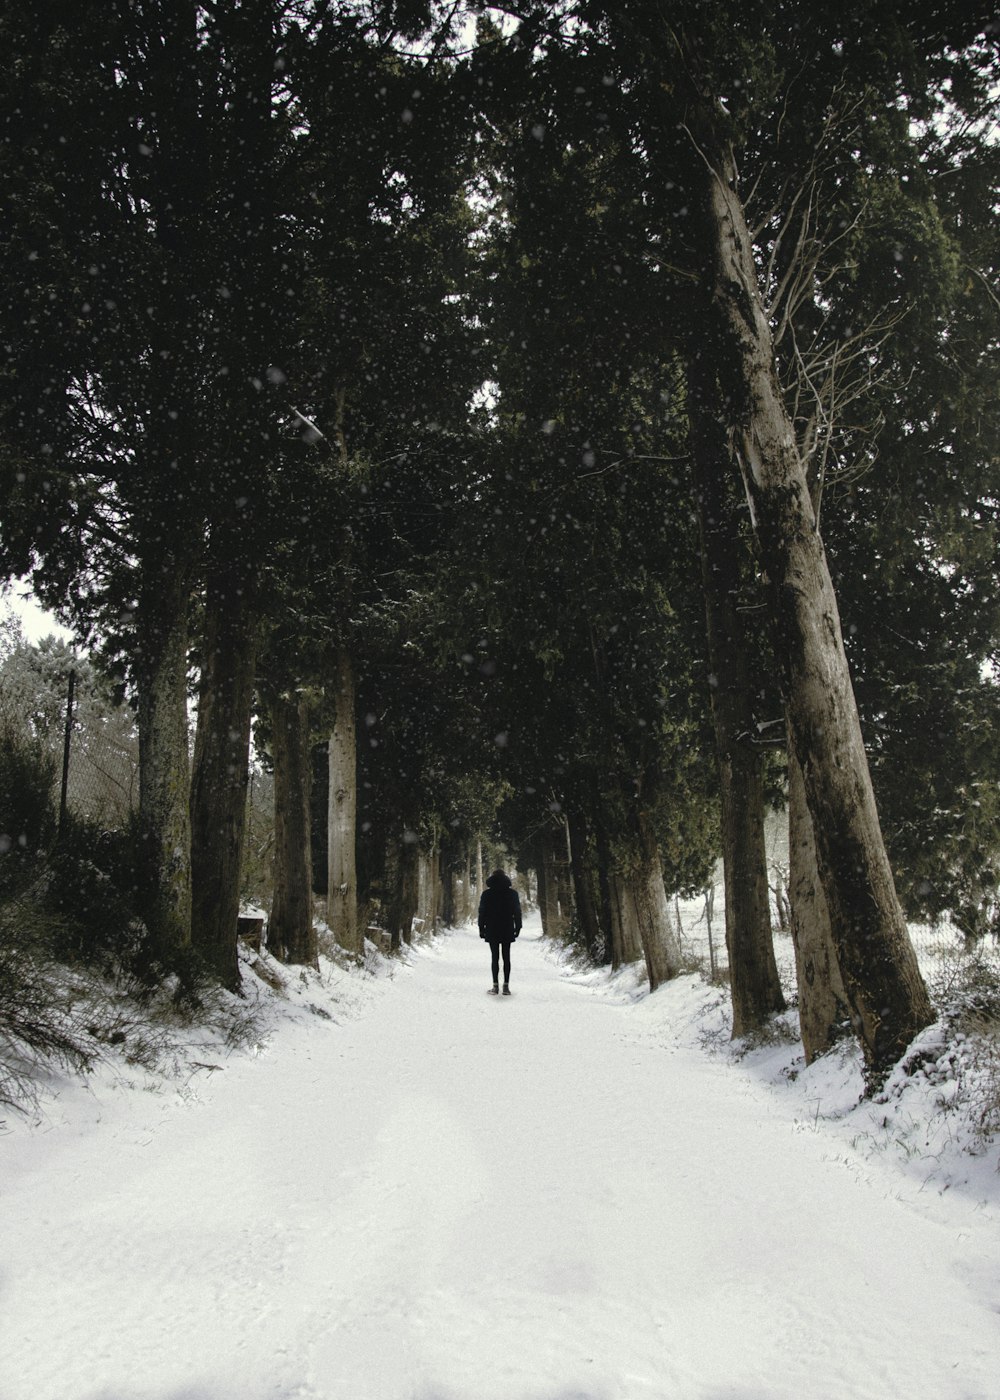 man walking on snow pathway between trees